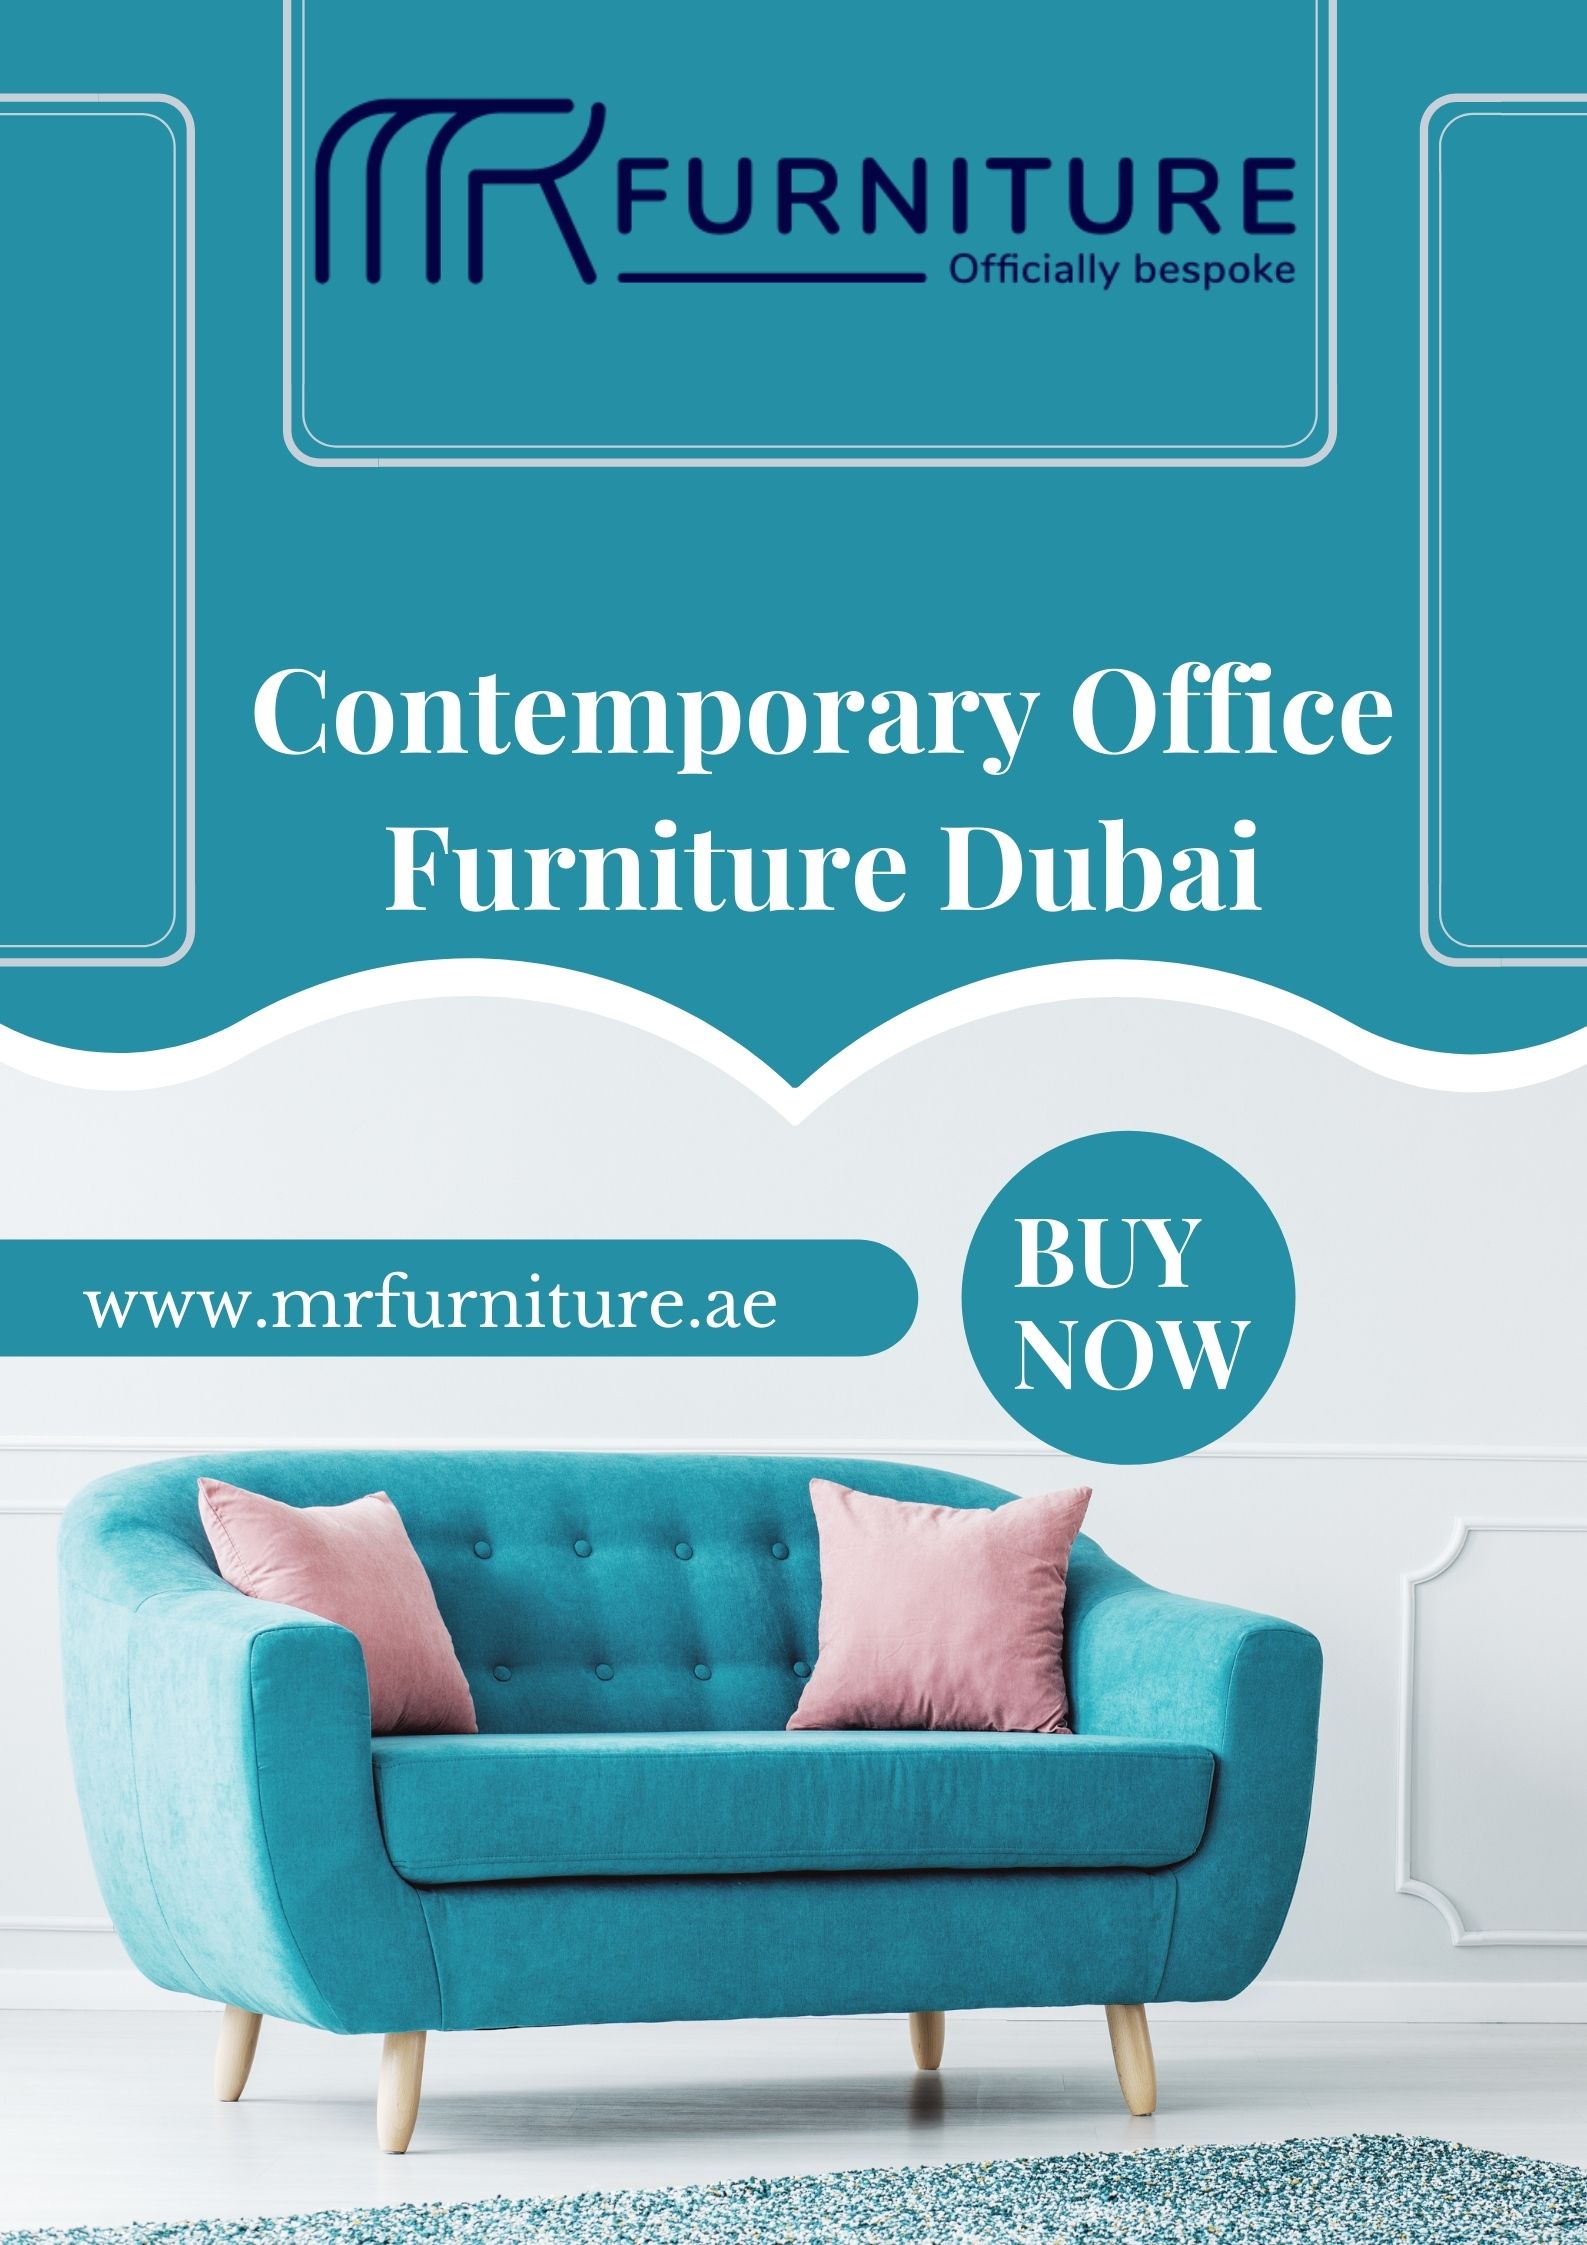 Modern Office Furniture Dubai of the Highest Quality - Customized Office Executive Desk